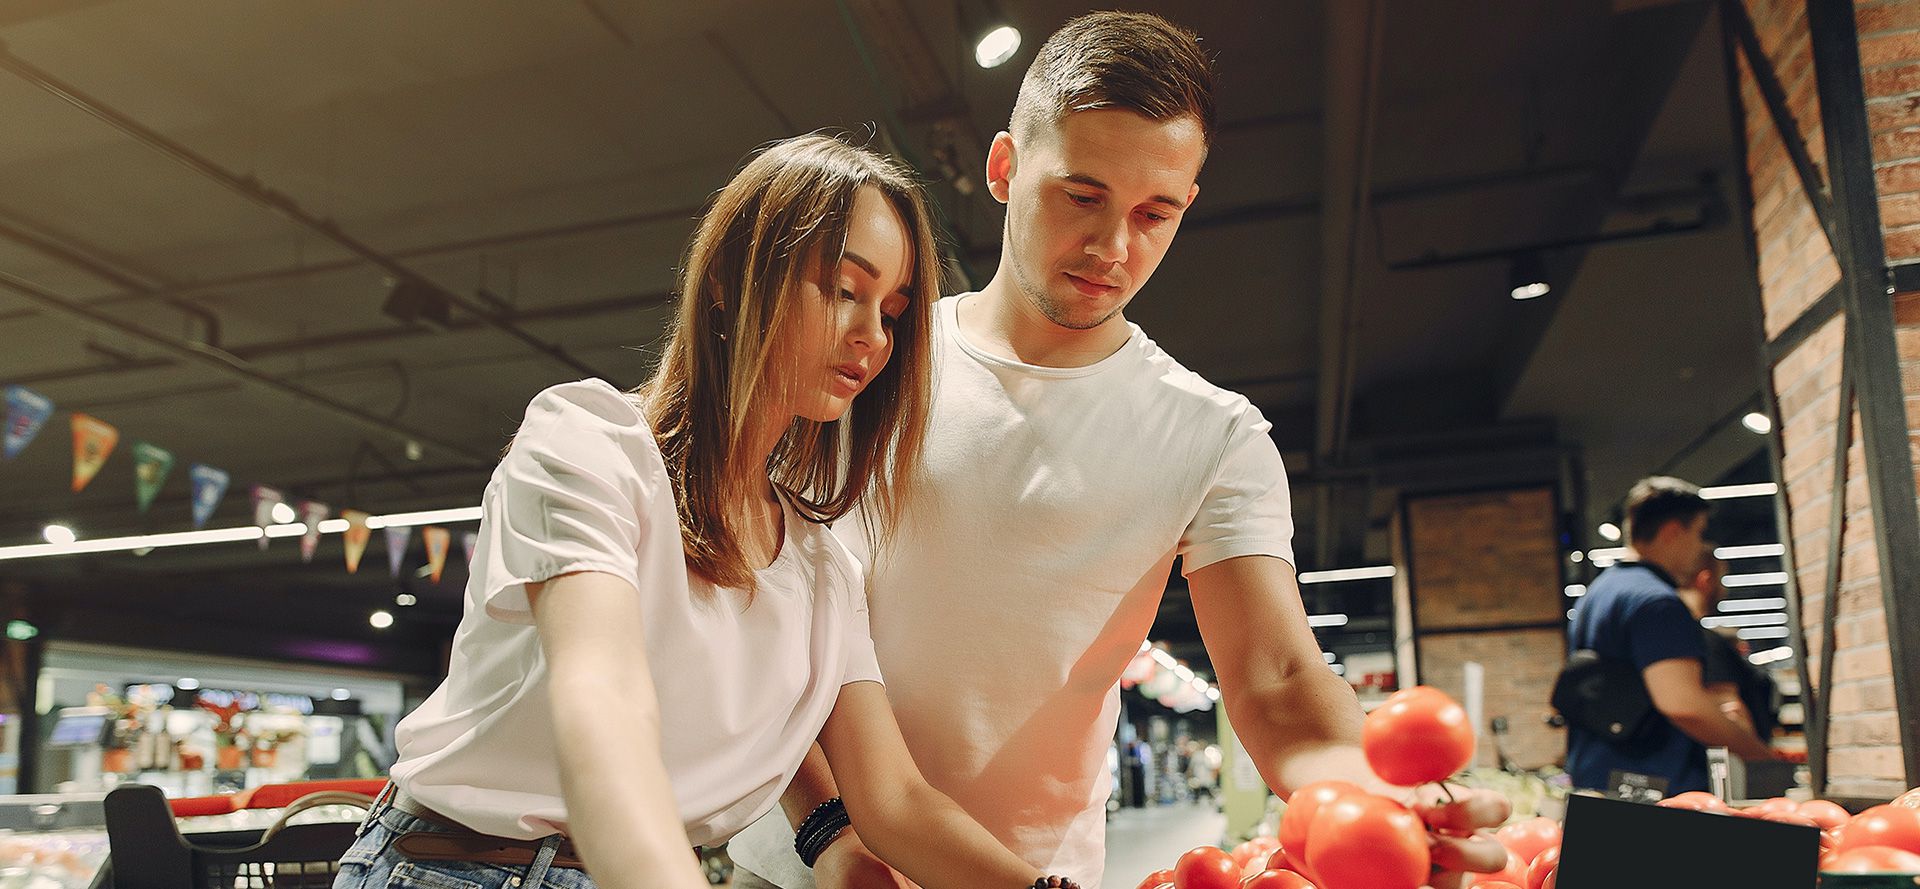 Vegan couple in the supermarket